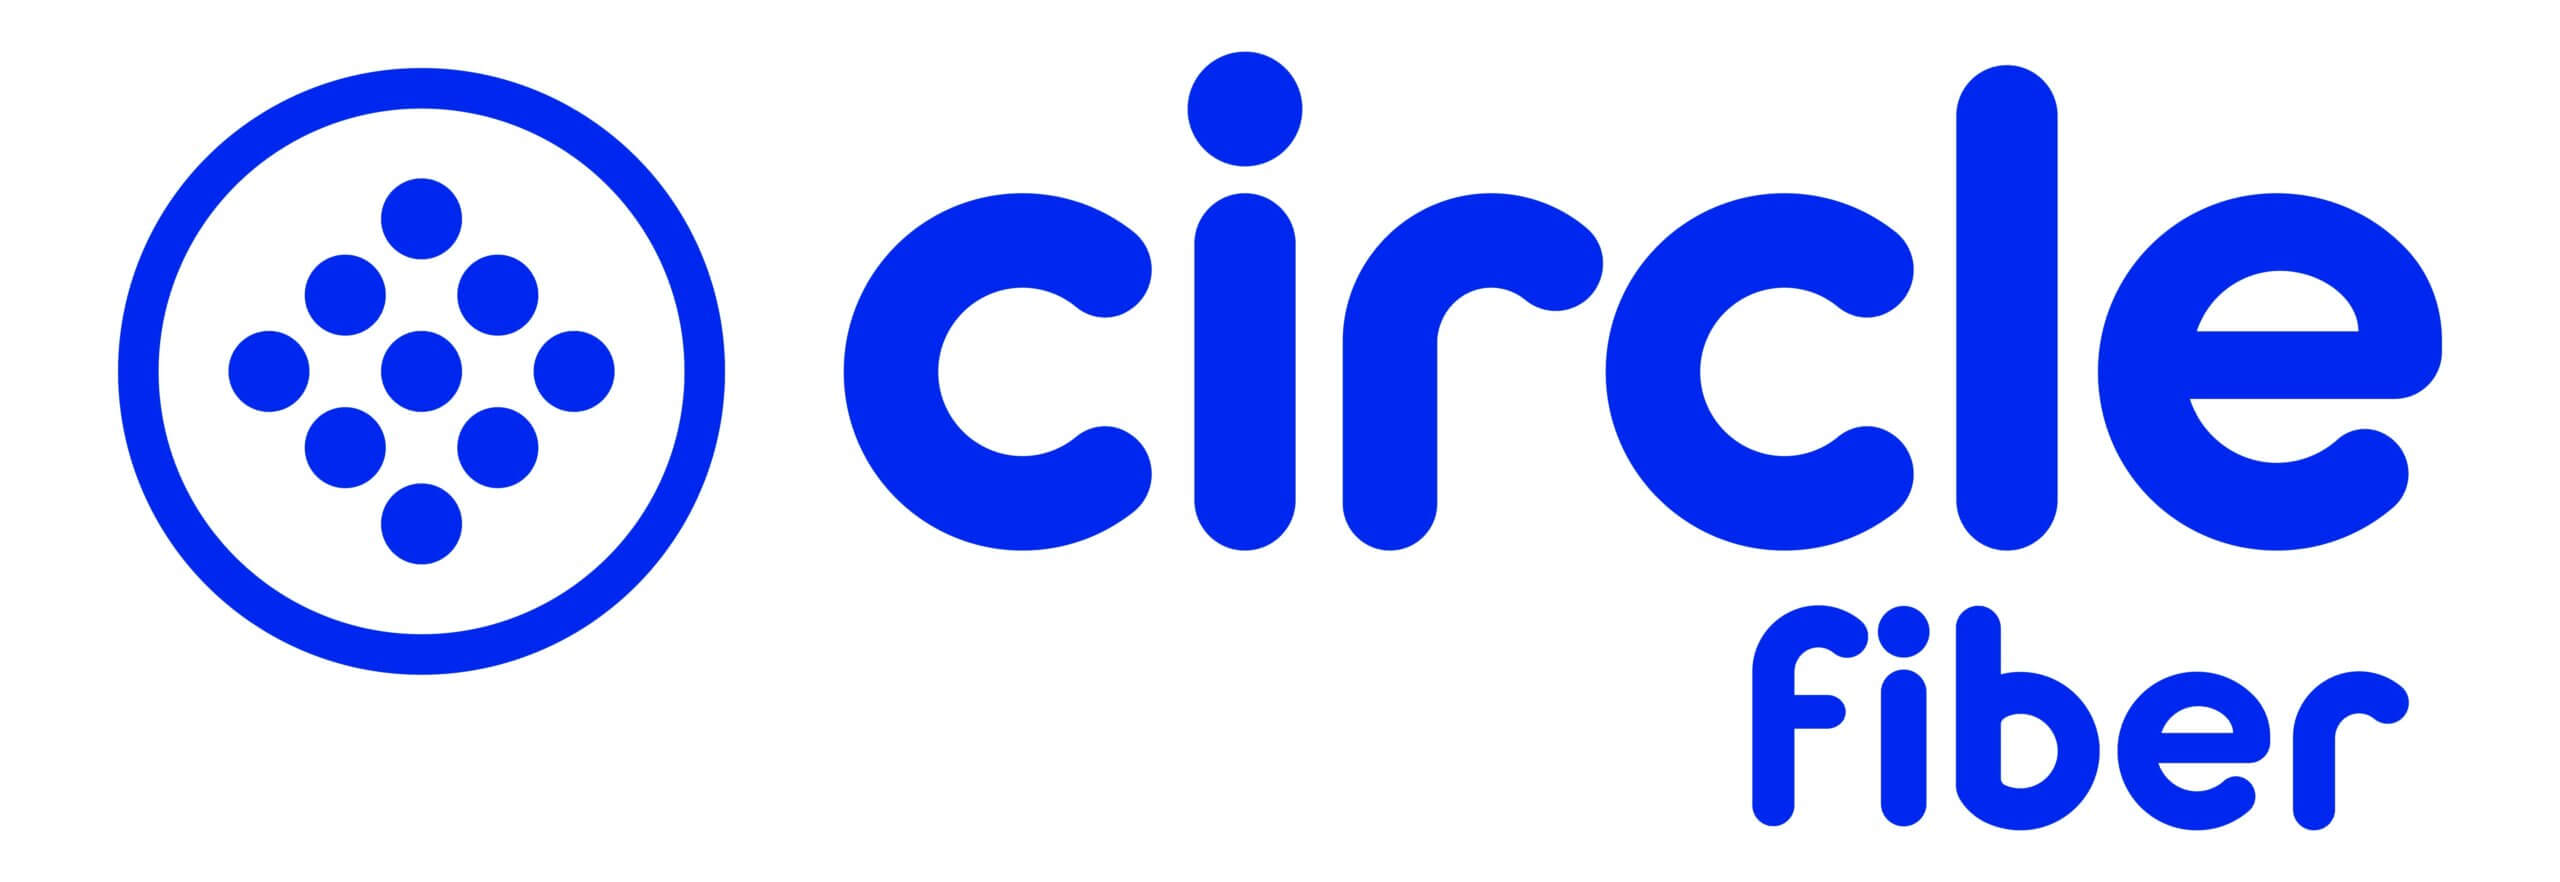 Circle Fiber 250 Sponsorship